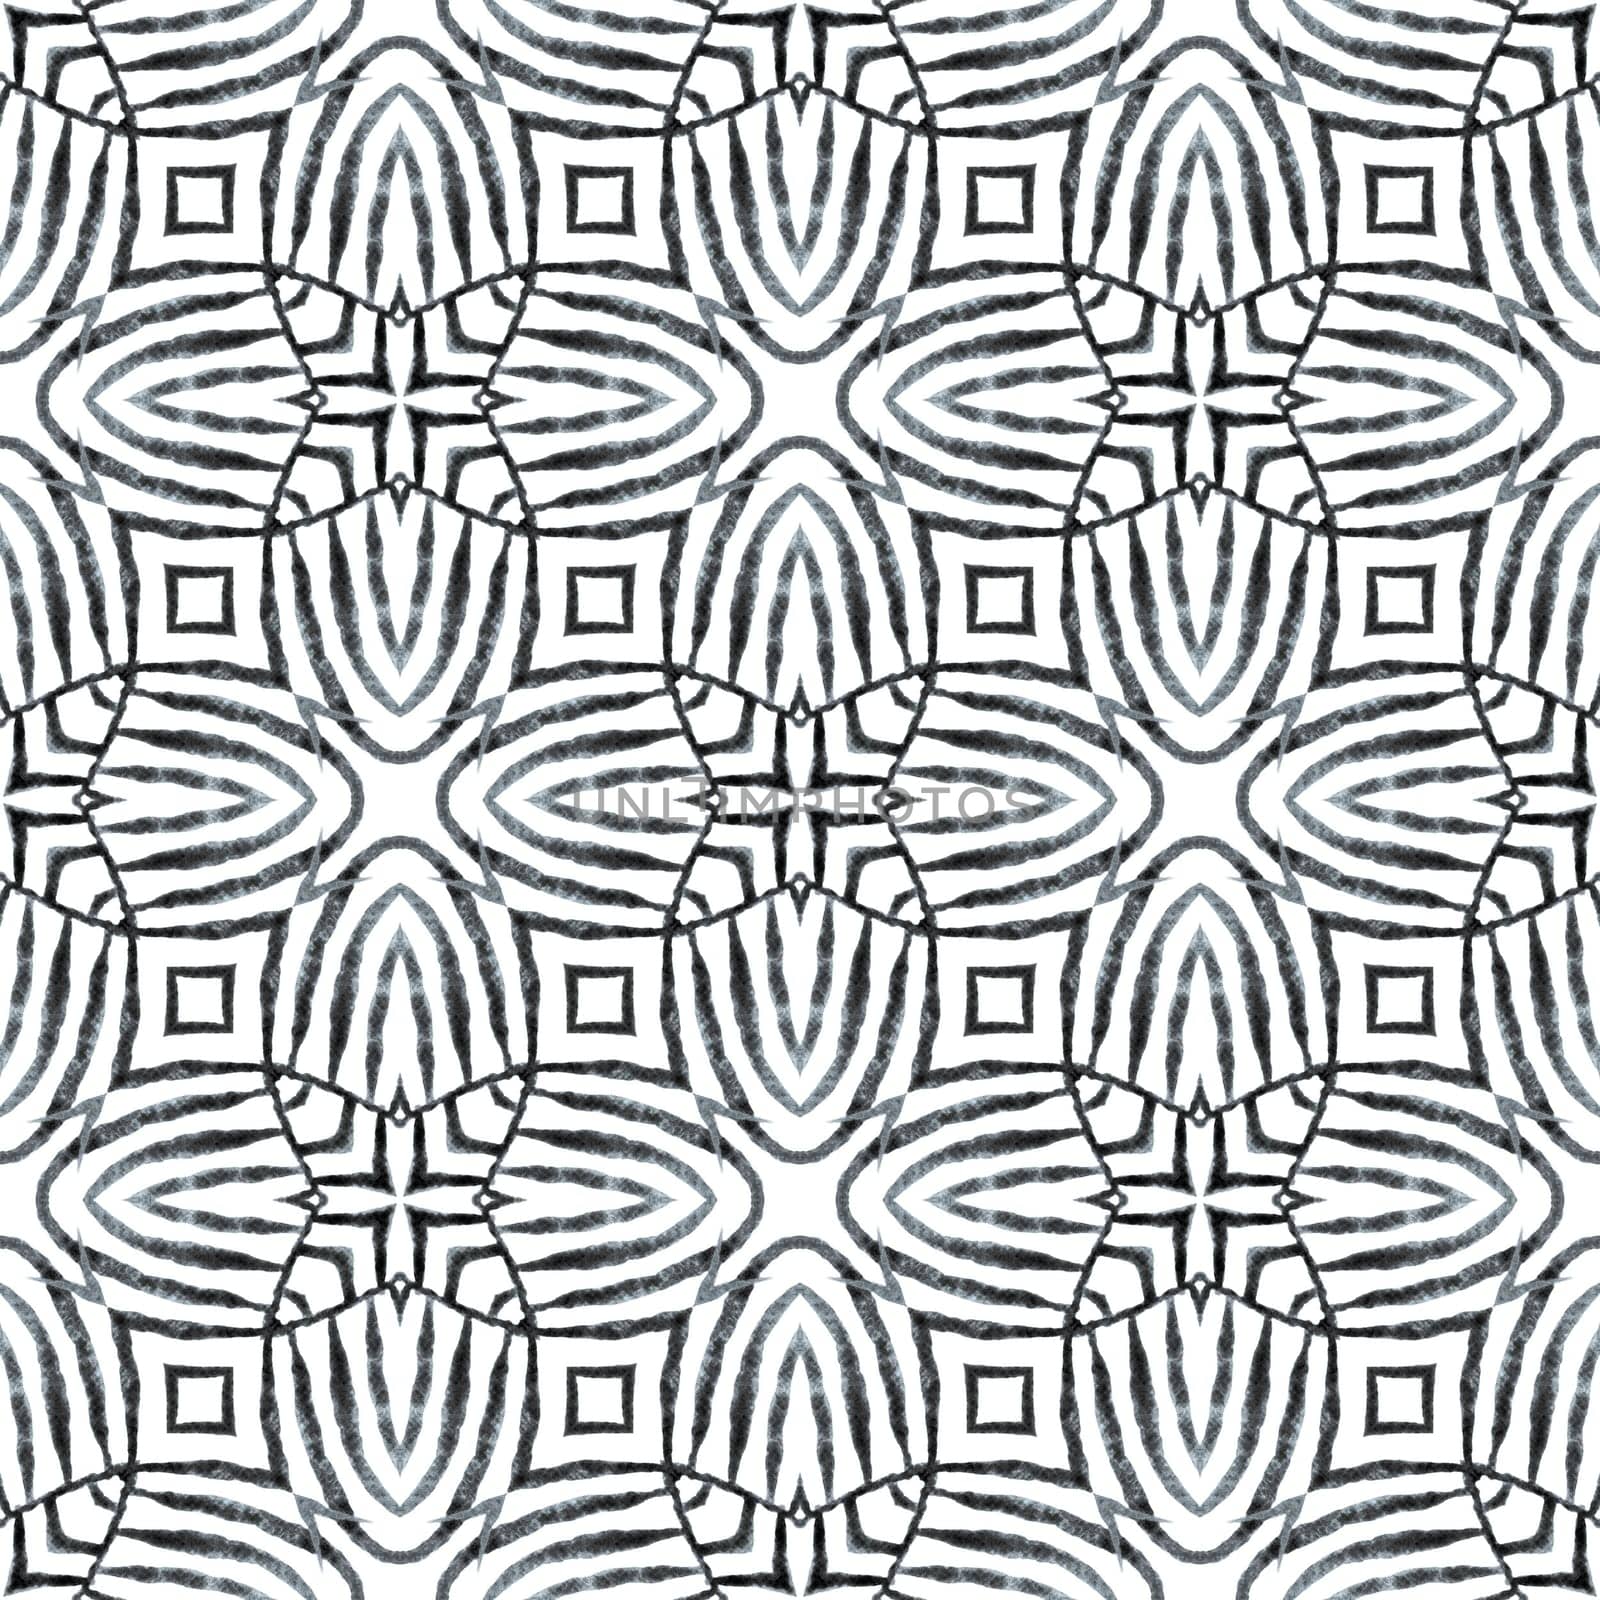 Textile ready uncommon print, swimwear fabric, wallpaper, wrapping. Black and white unique boho chic summer design. Mosaic seamless pattern. Hand drawn green mosaic seamless border.